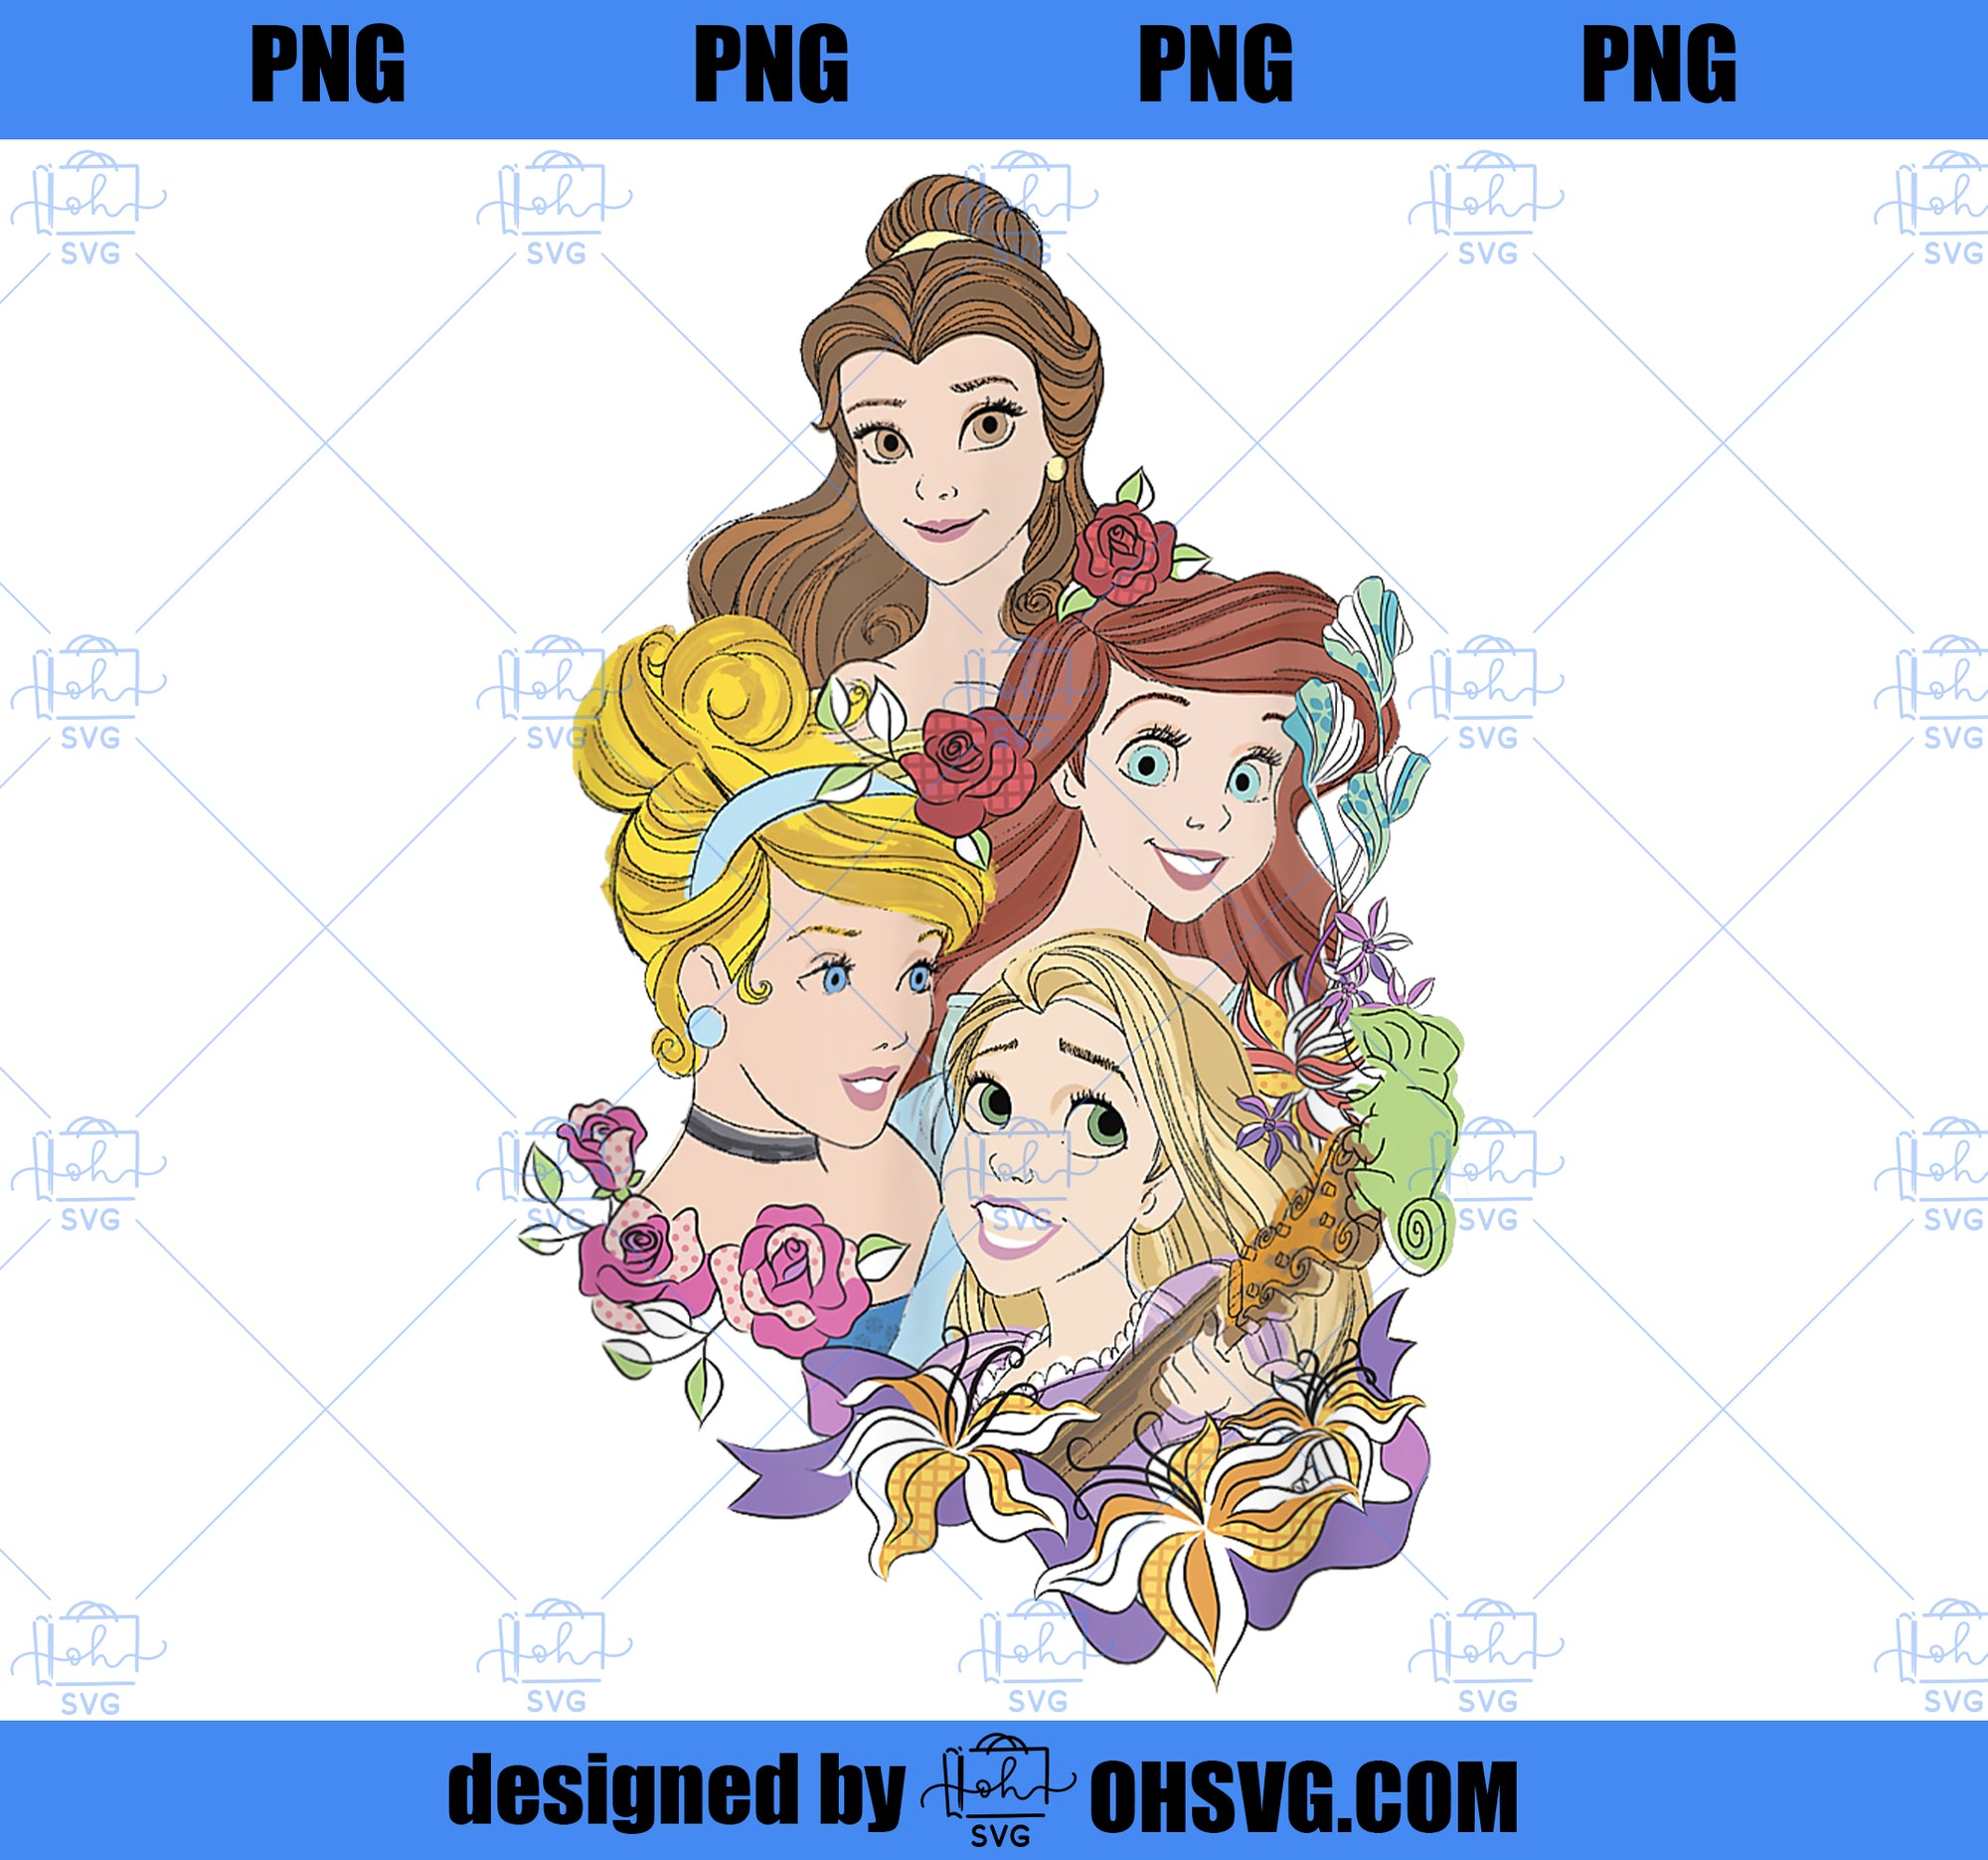 Disney Princess Floral Belle Cinderella Ariel Rapunzel PNG, Disney PNG, Princess PNG